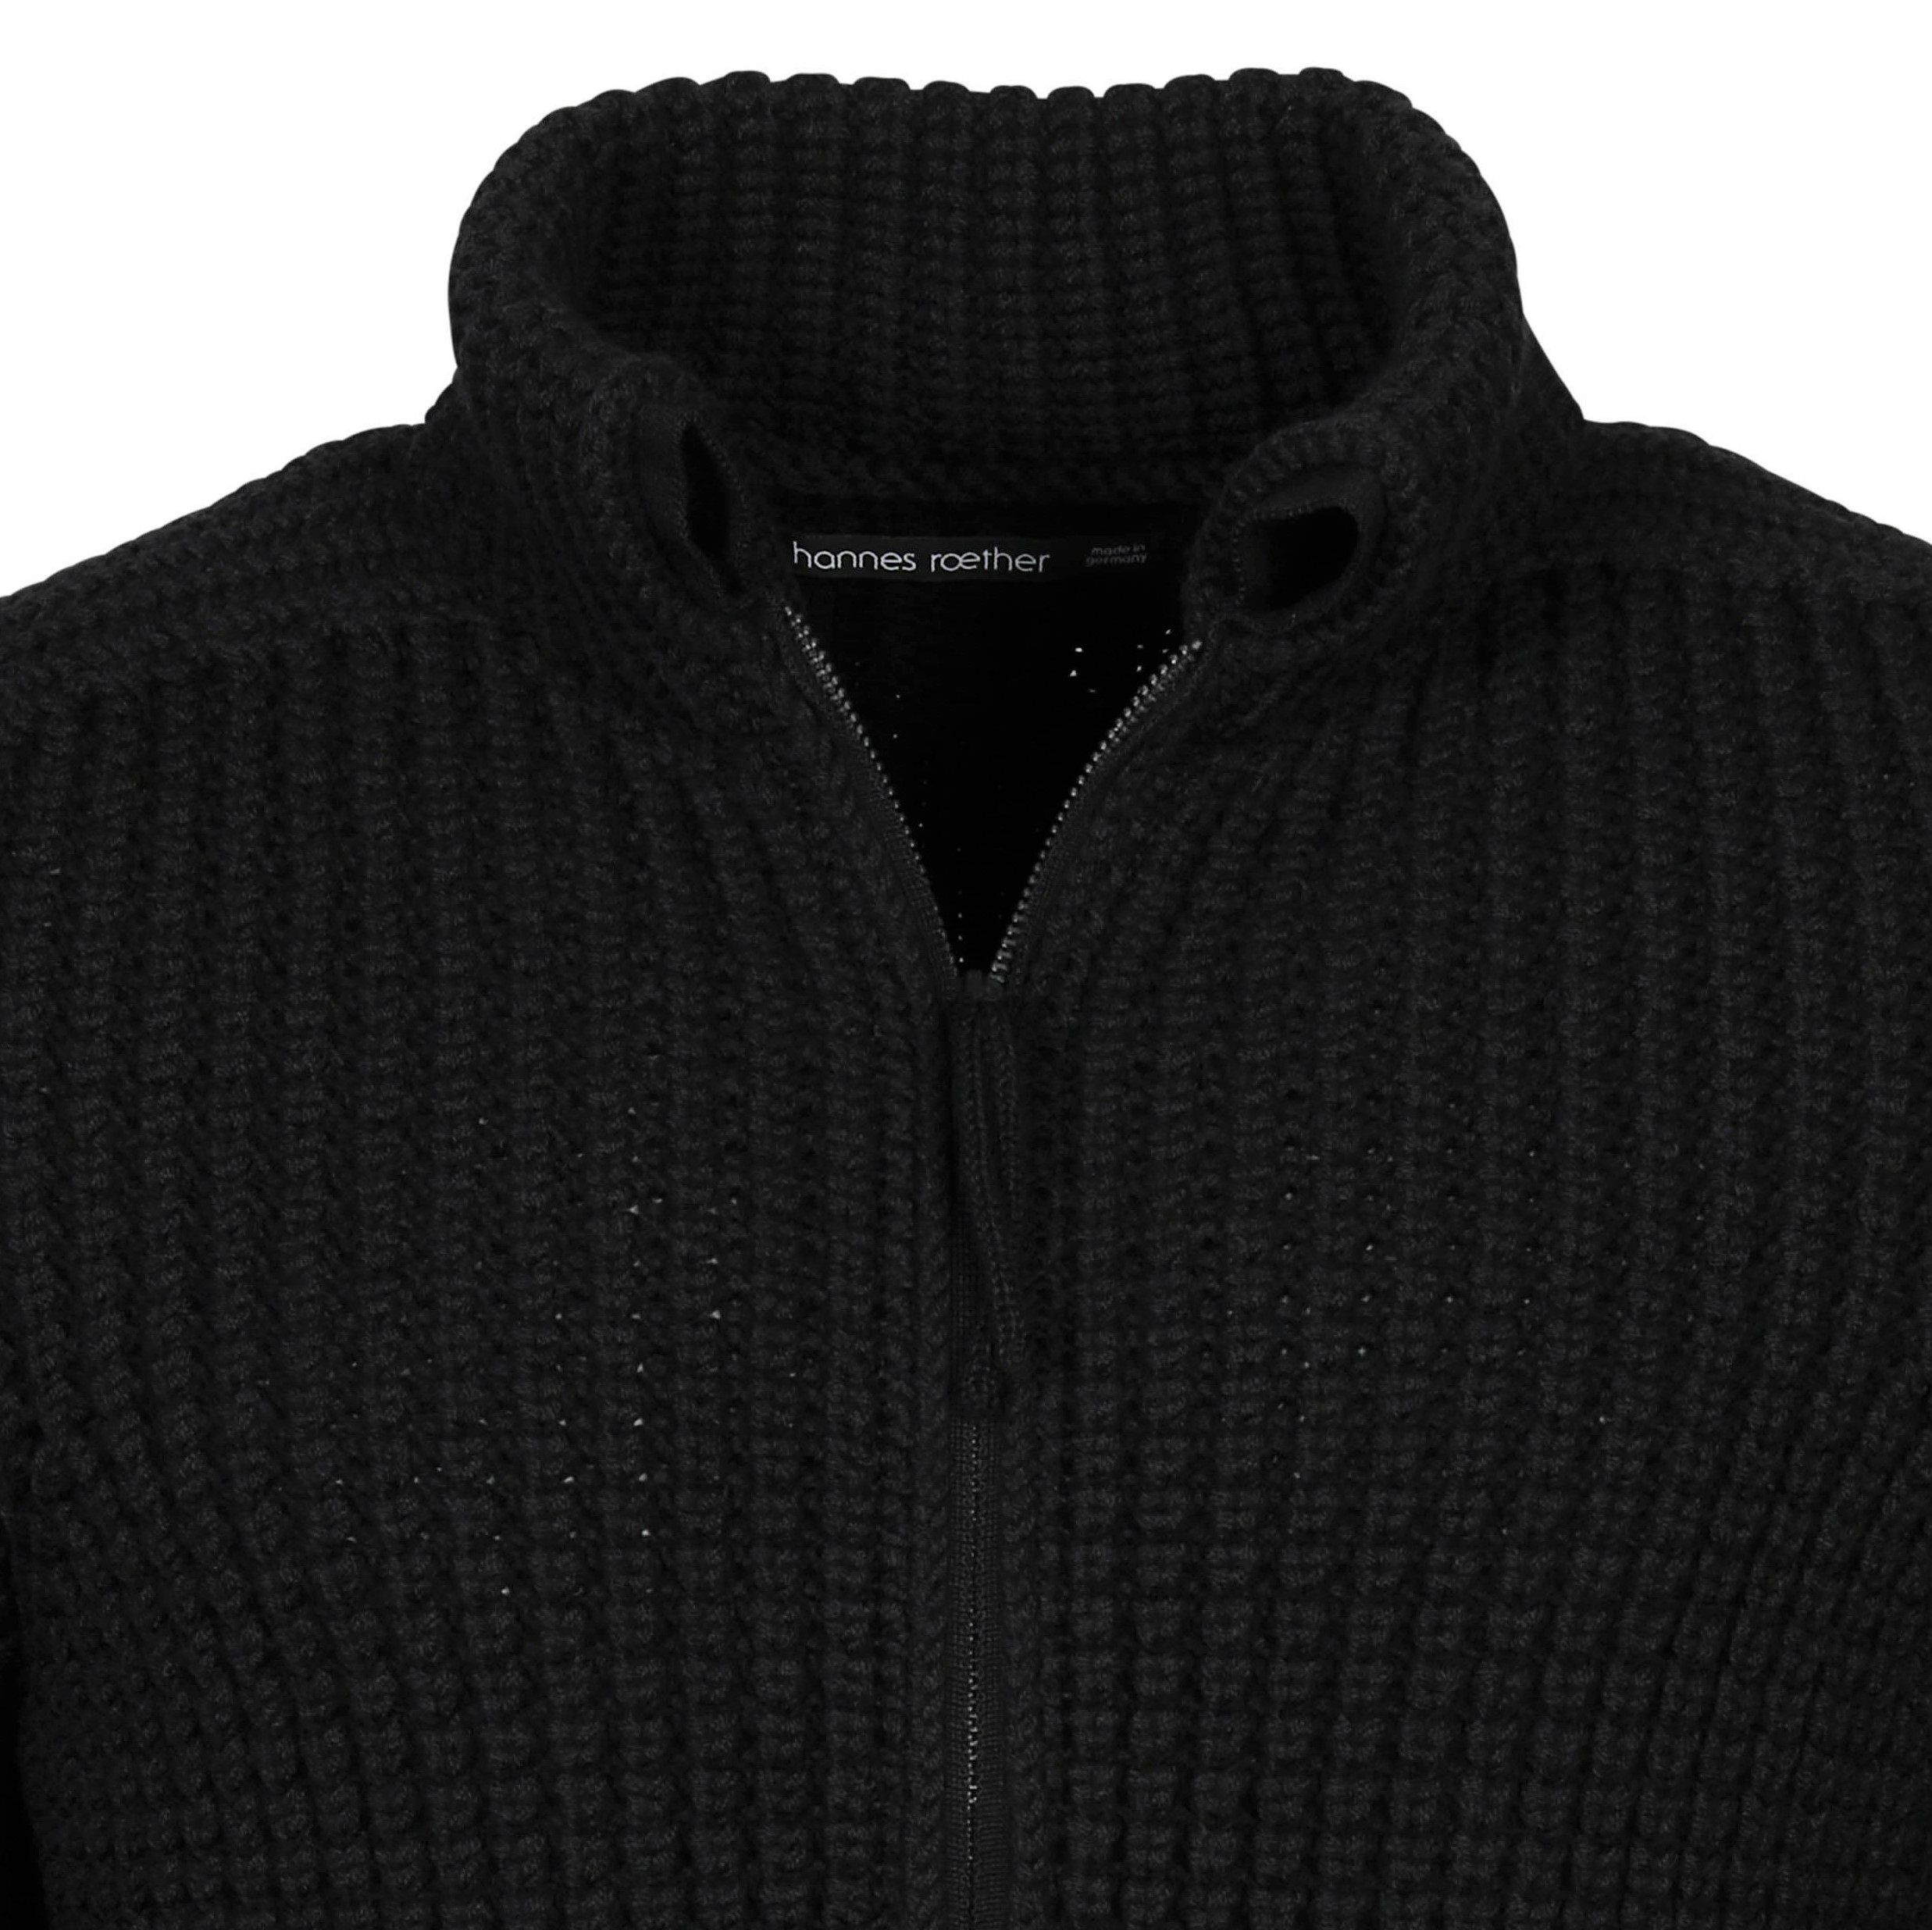 Hannes Roether Zip Knit Cardigan in Black